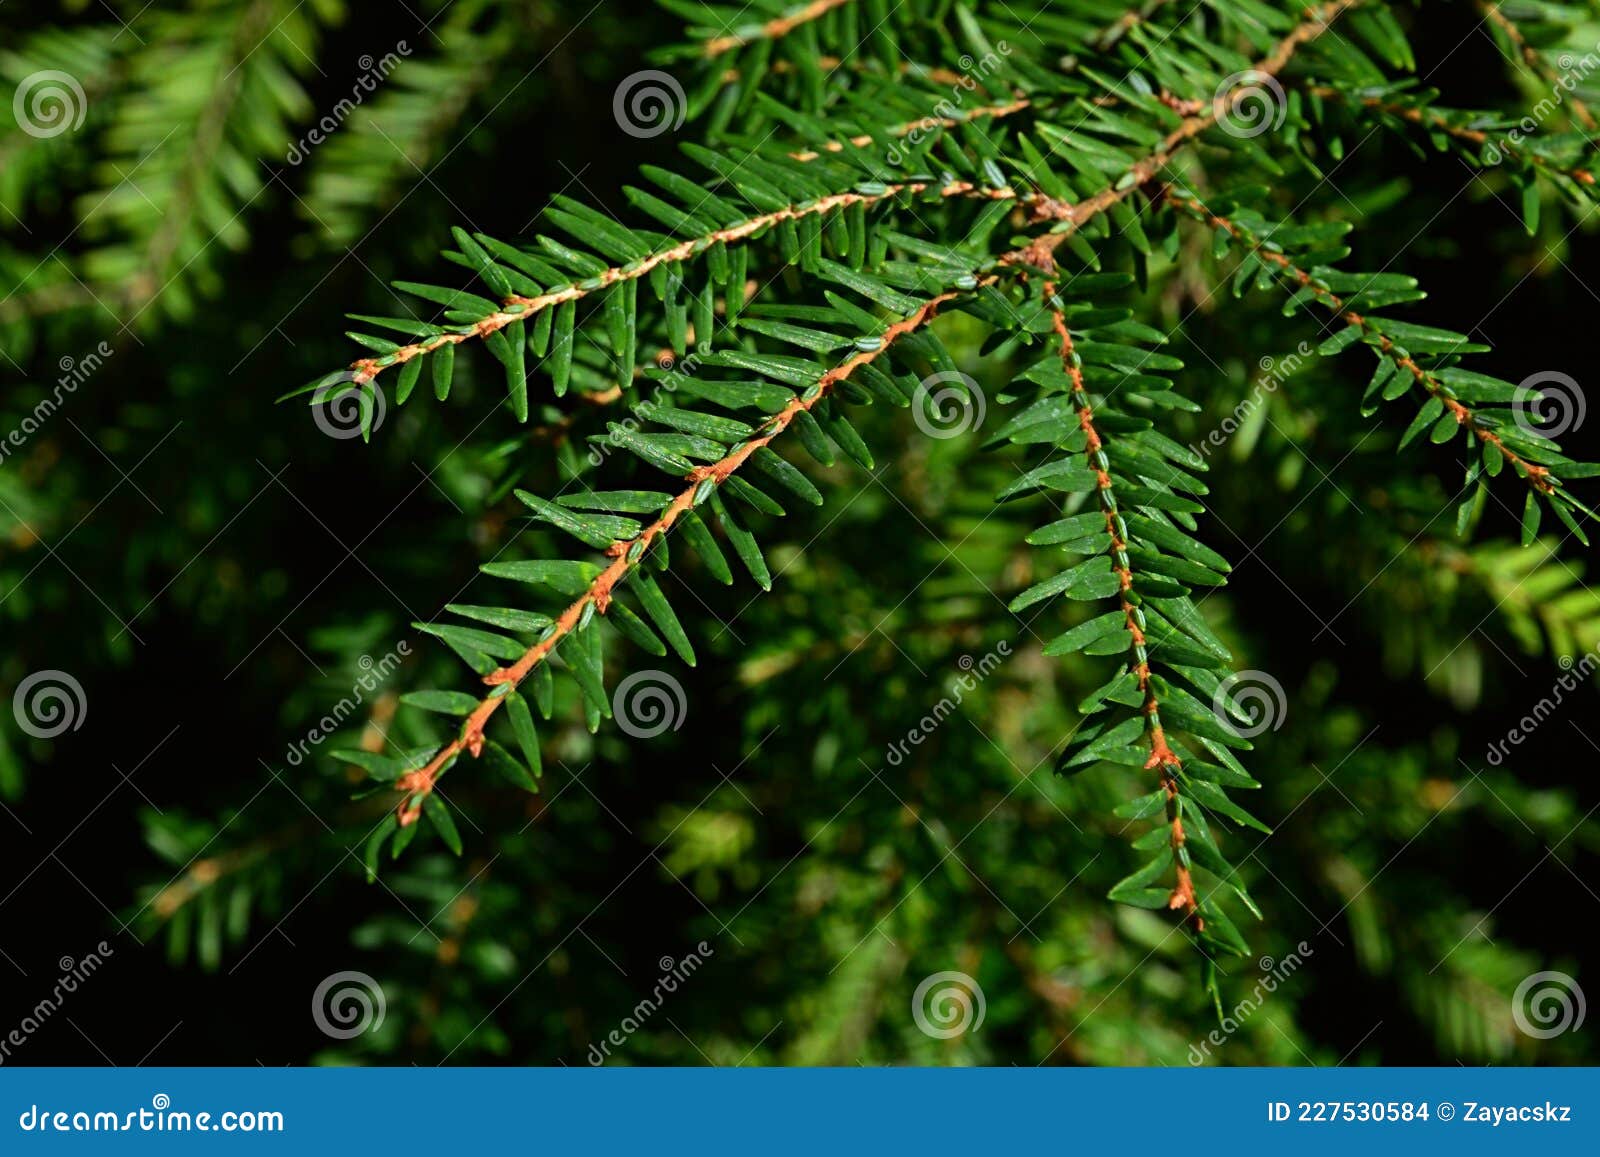 green coniferous branch tip of western hemlock, also called western hemlock-spruce, latin name tsuga heterophylla